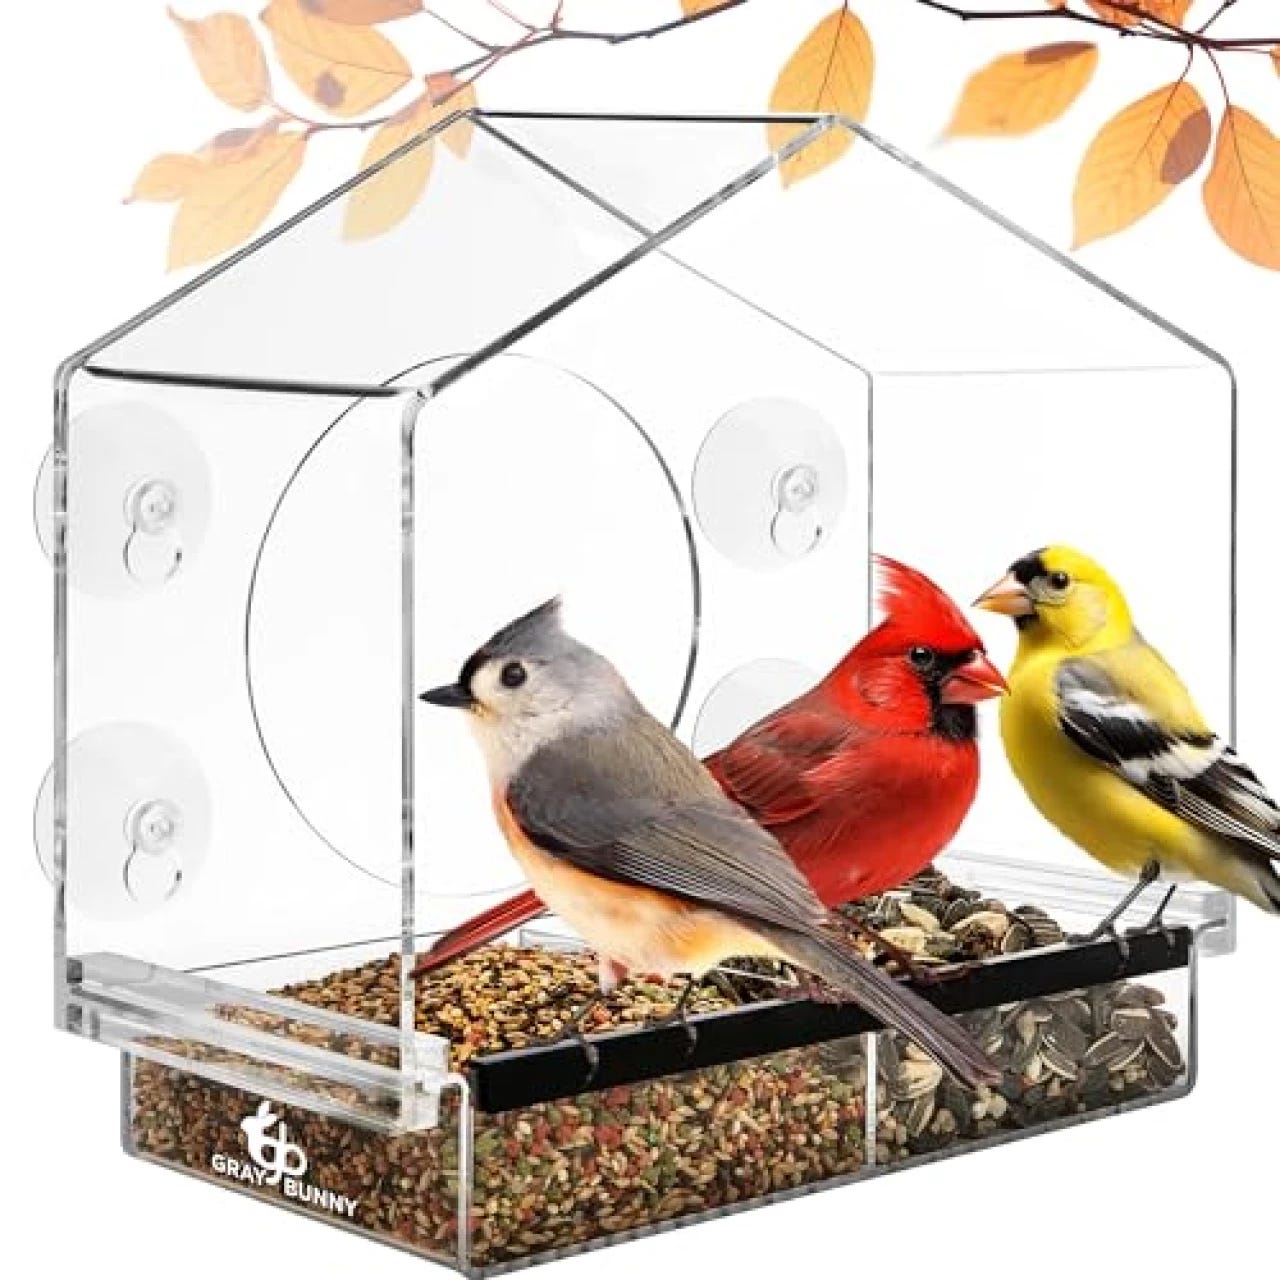 Homebird Window Bird Feeder with Strong Suction Cups Bird Window Feeder with